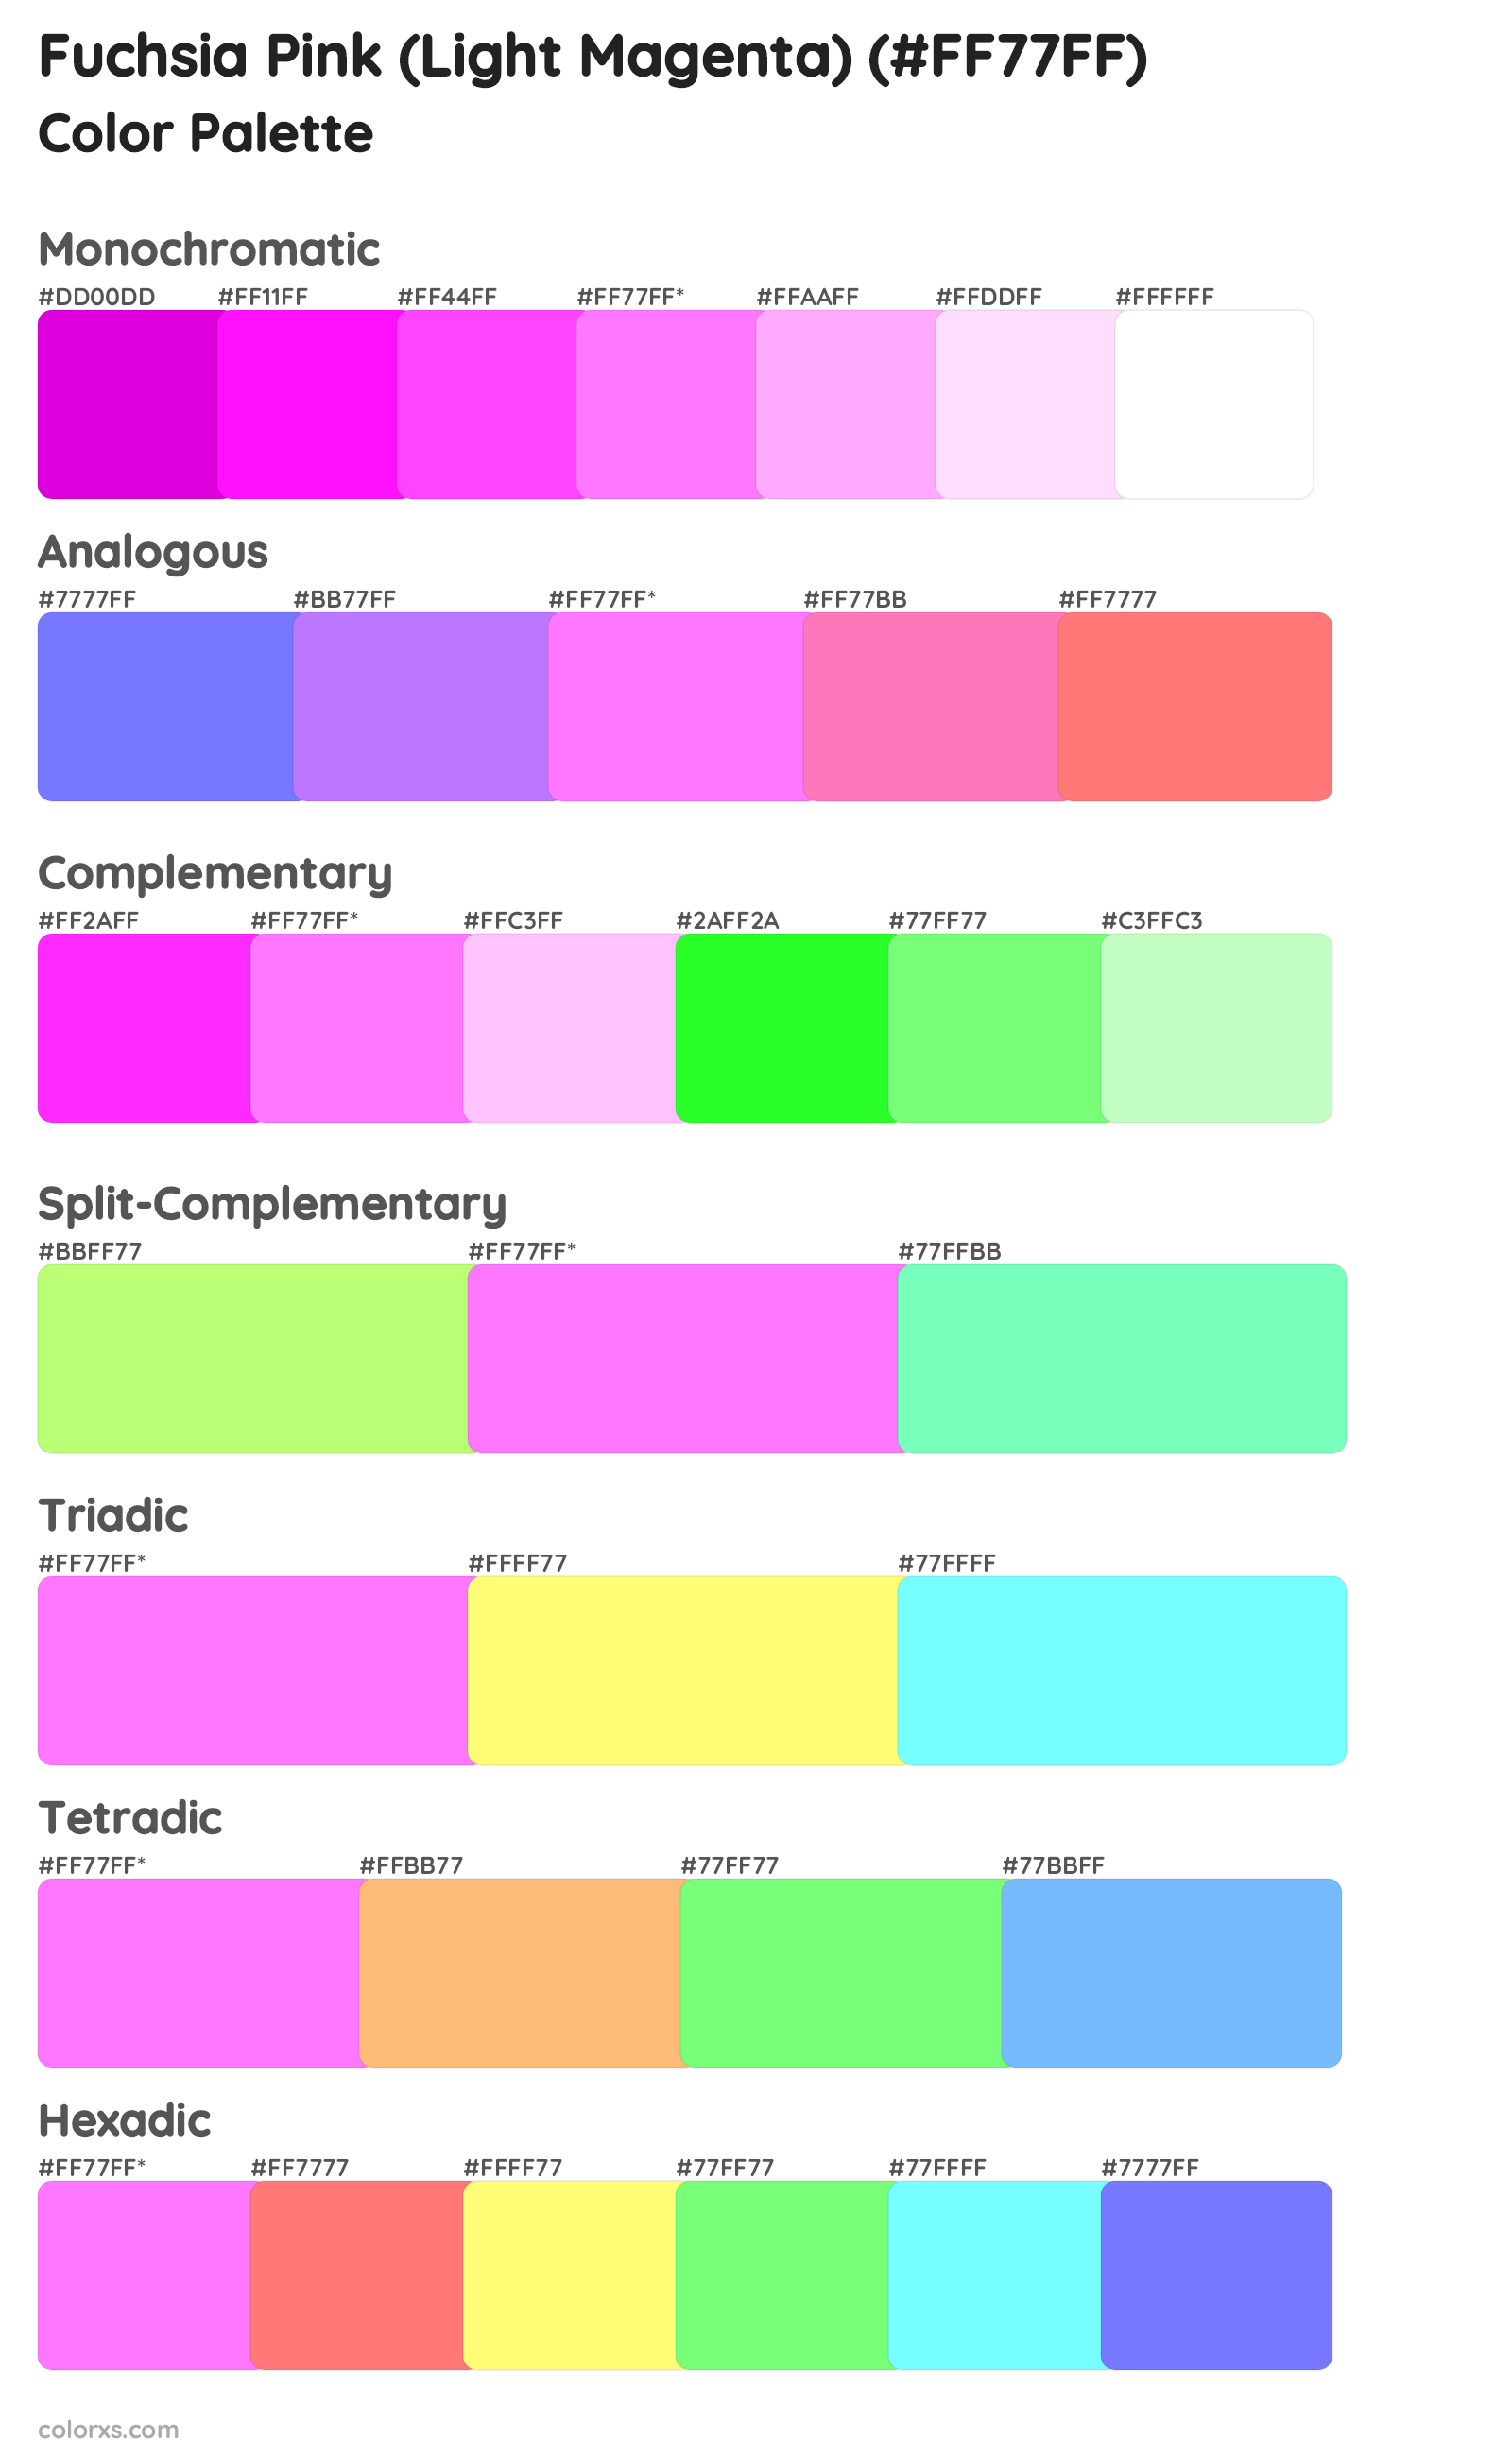 Fuchsia Pink (Light Magenta) Color Scheme Palettes